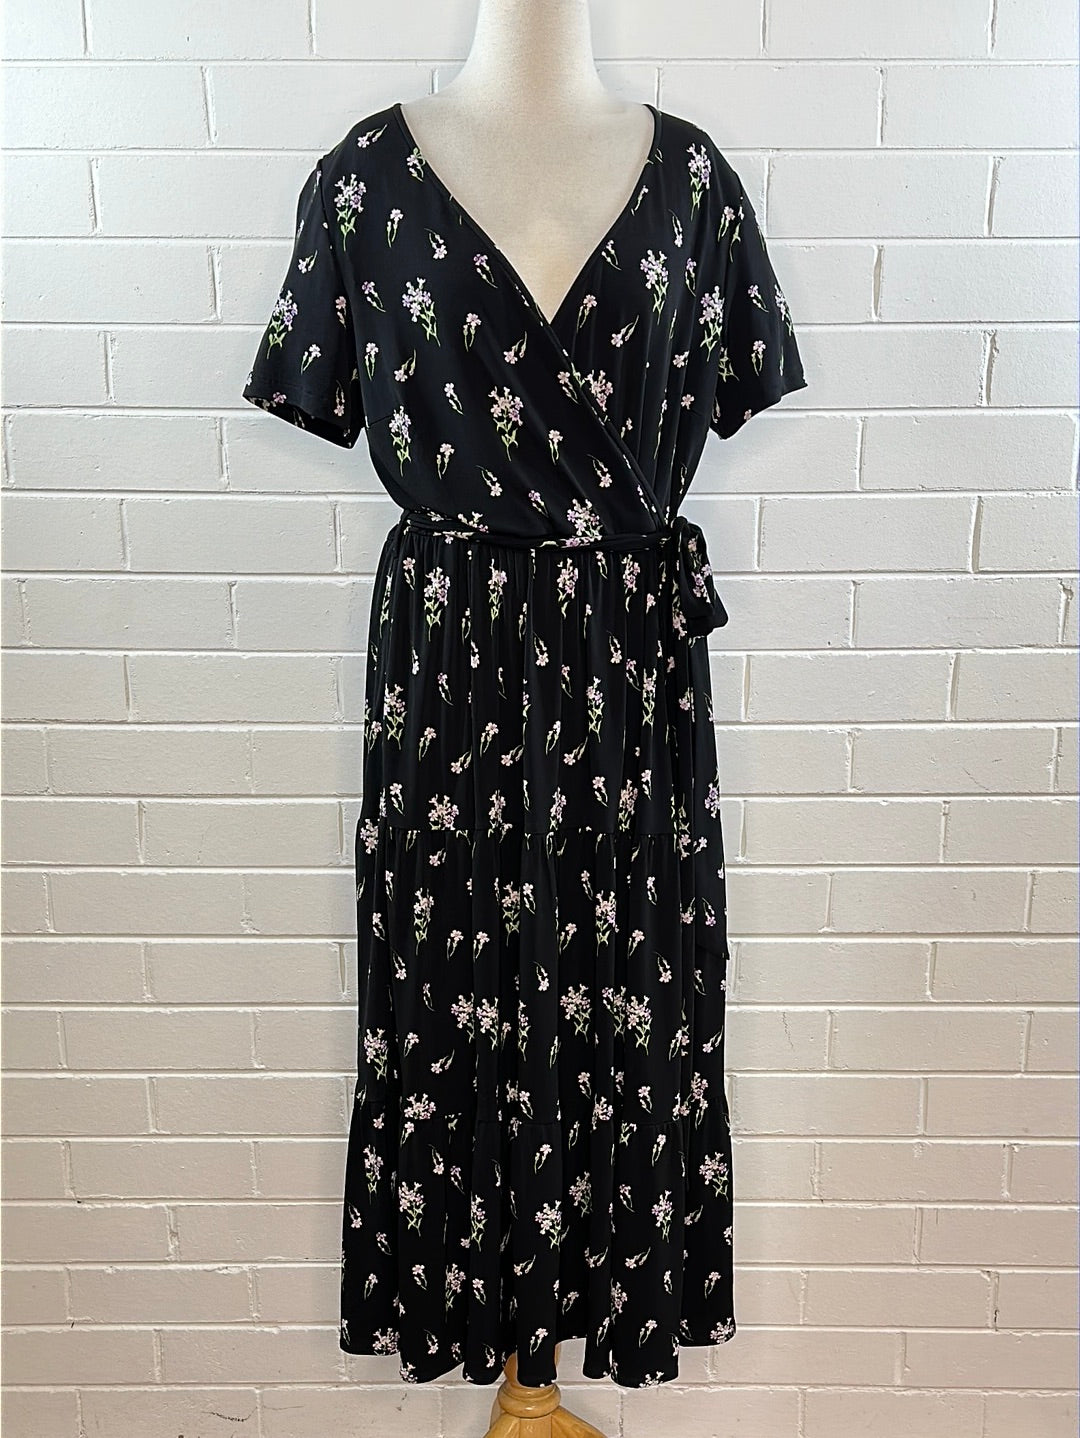 Leona Edmiston | dress | size  14 | maxi length | new with tags